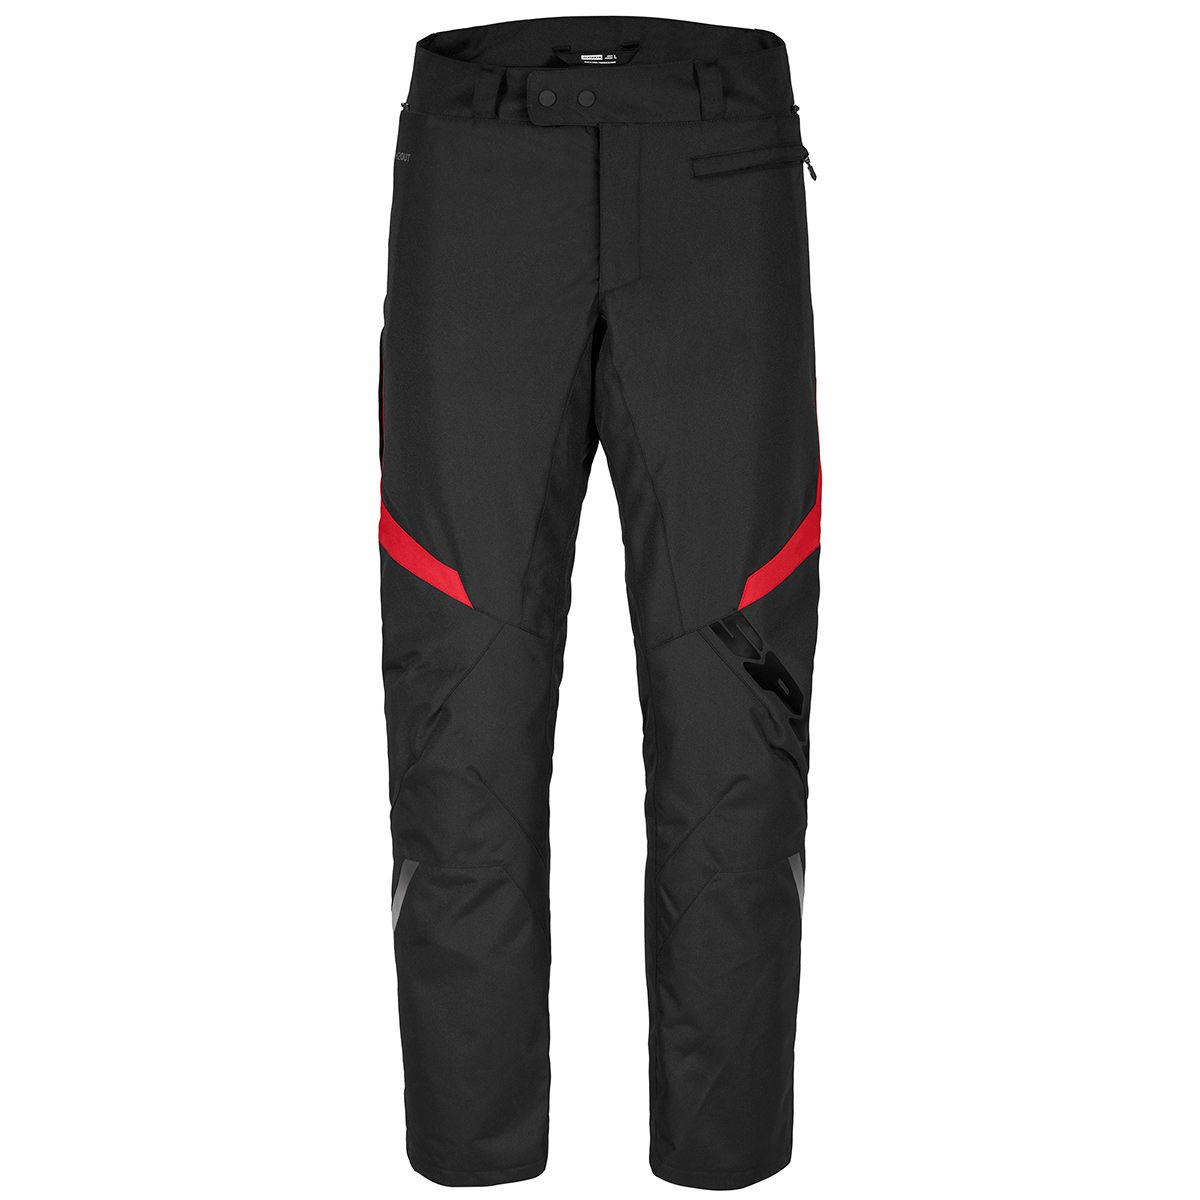 Image of Spidi Sportmaster Noir Rouge Pantalon Taille S